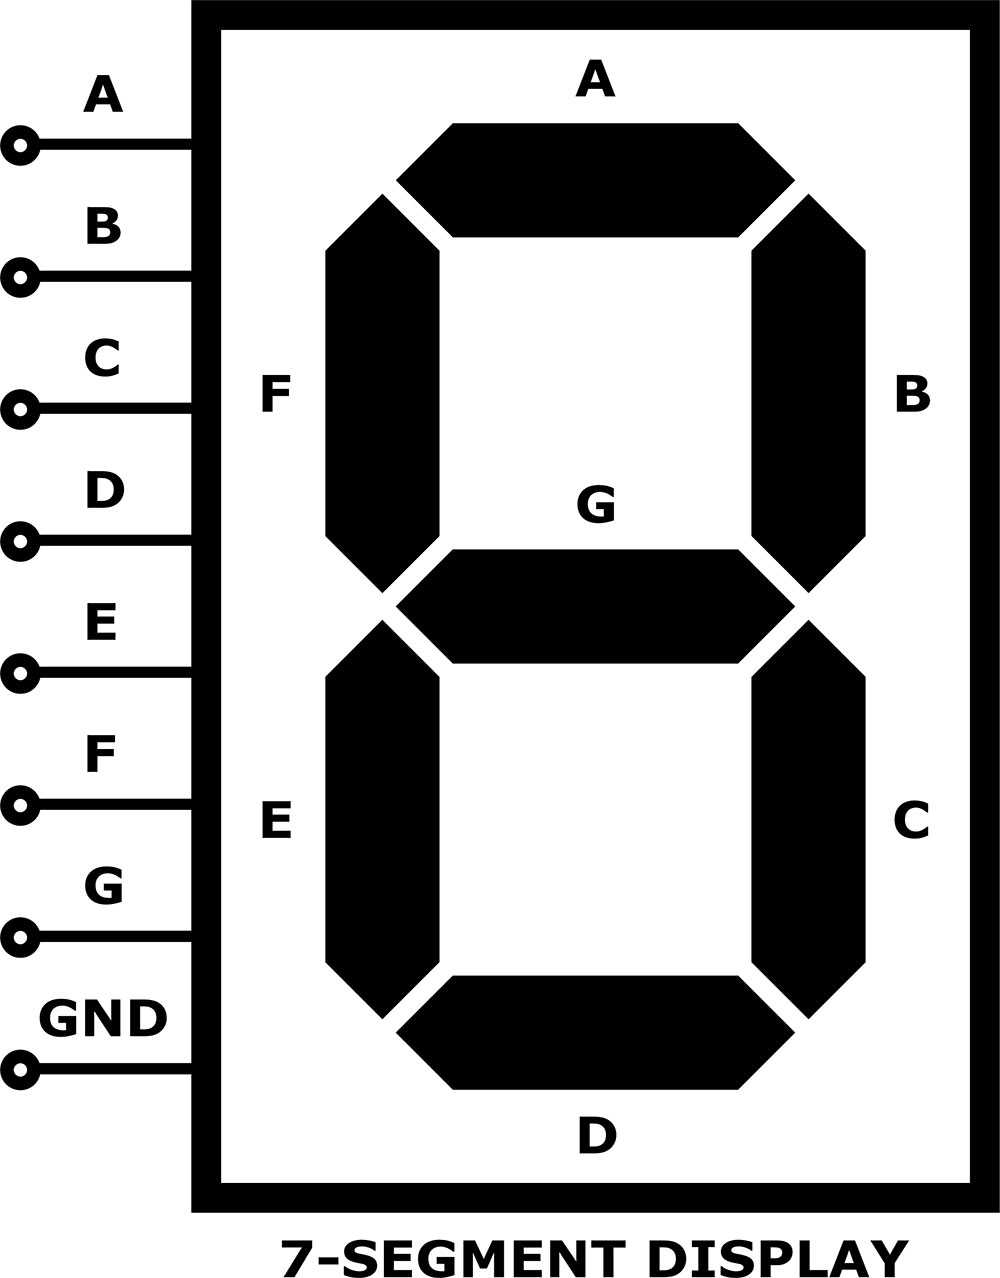 A 7-segment display pins